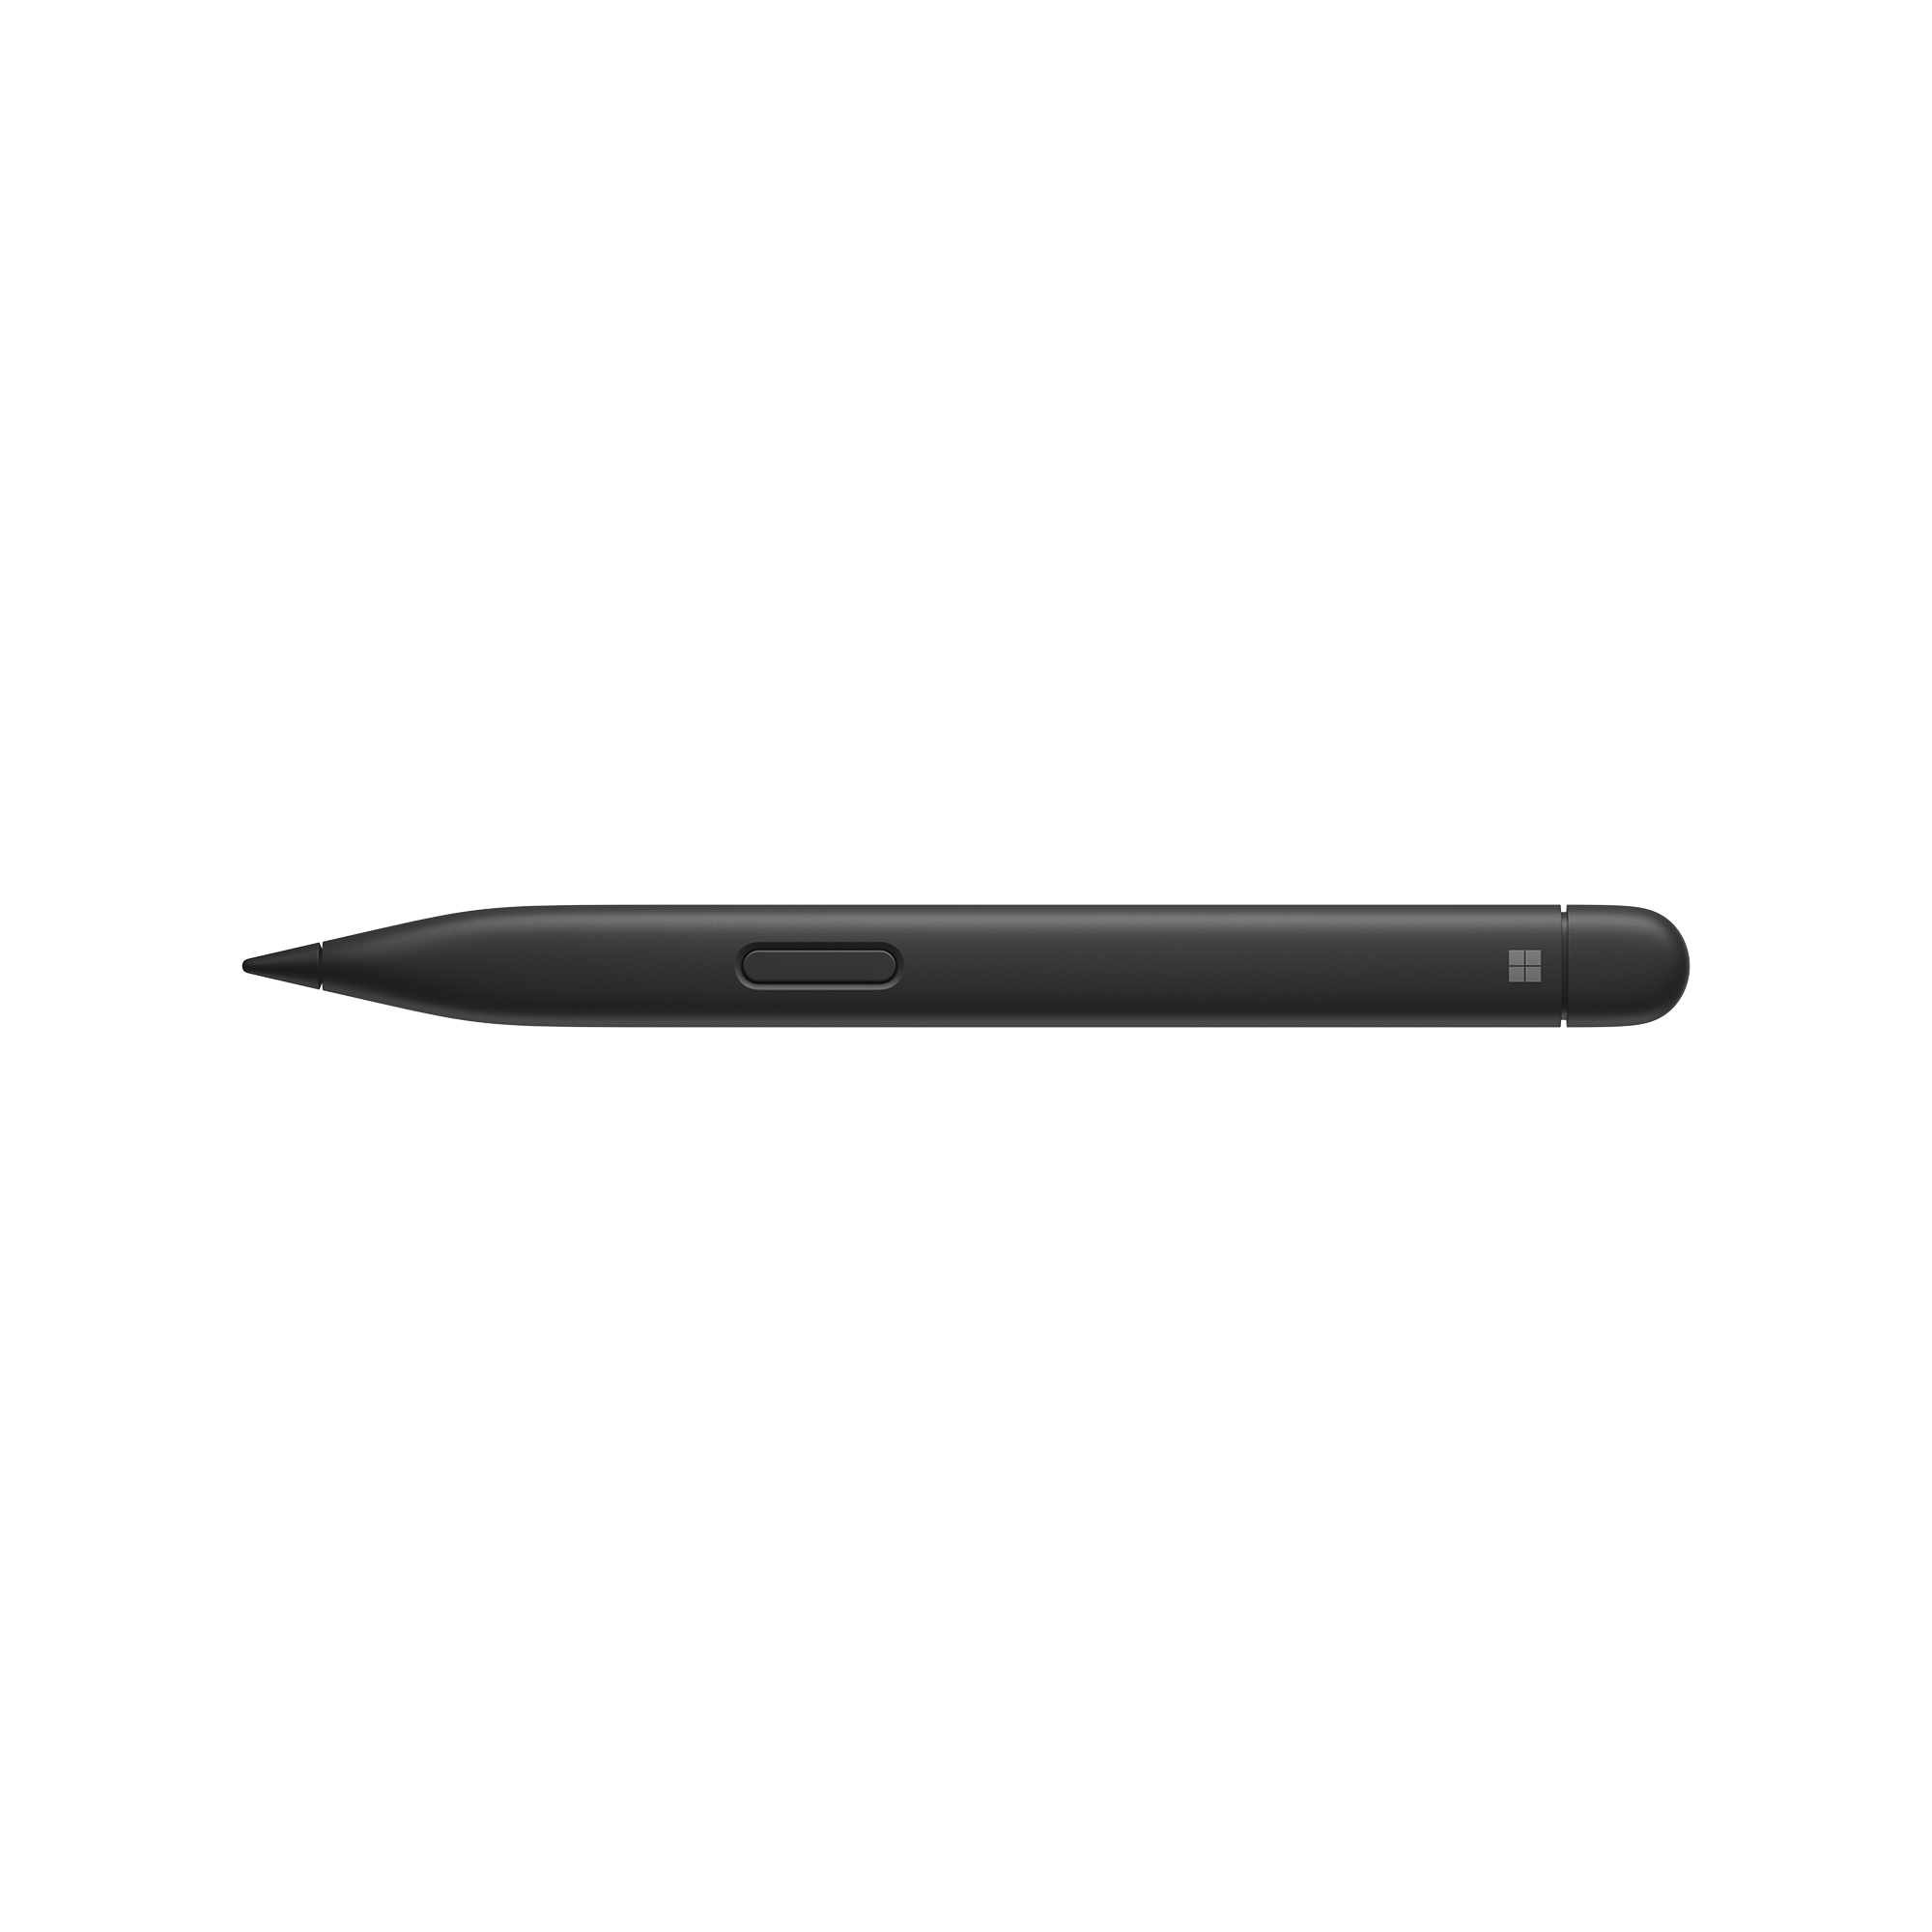 Microsoft 8X6-00001 Surface Pro Signature Pen 2 with Black - Keyboard Slim